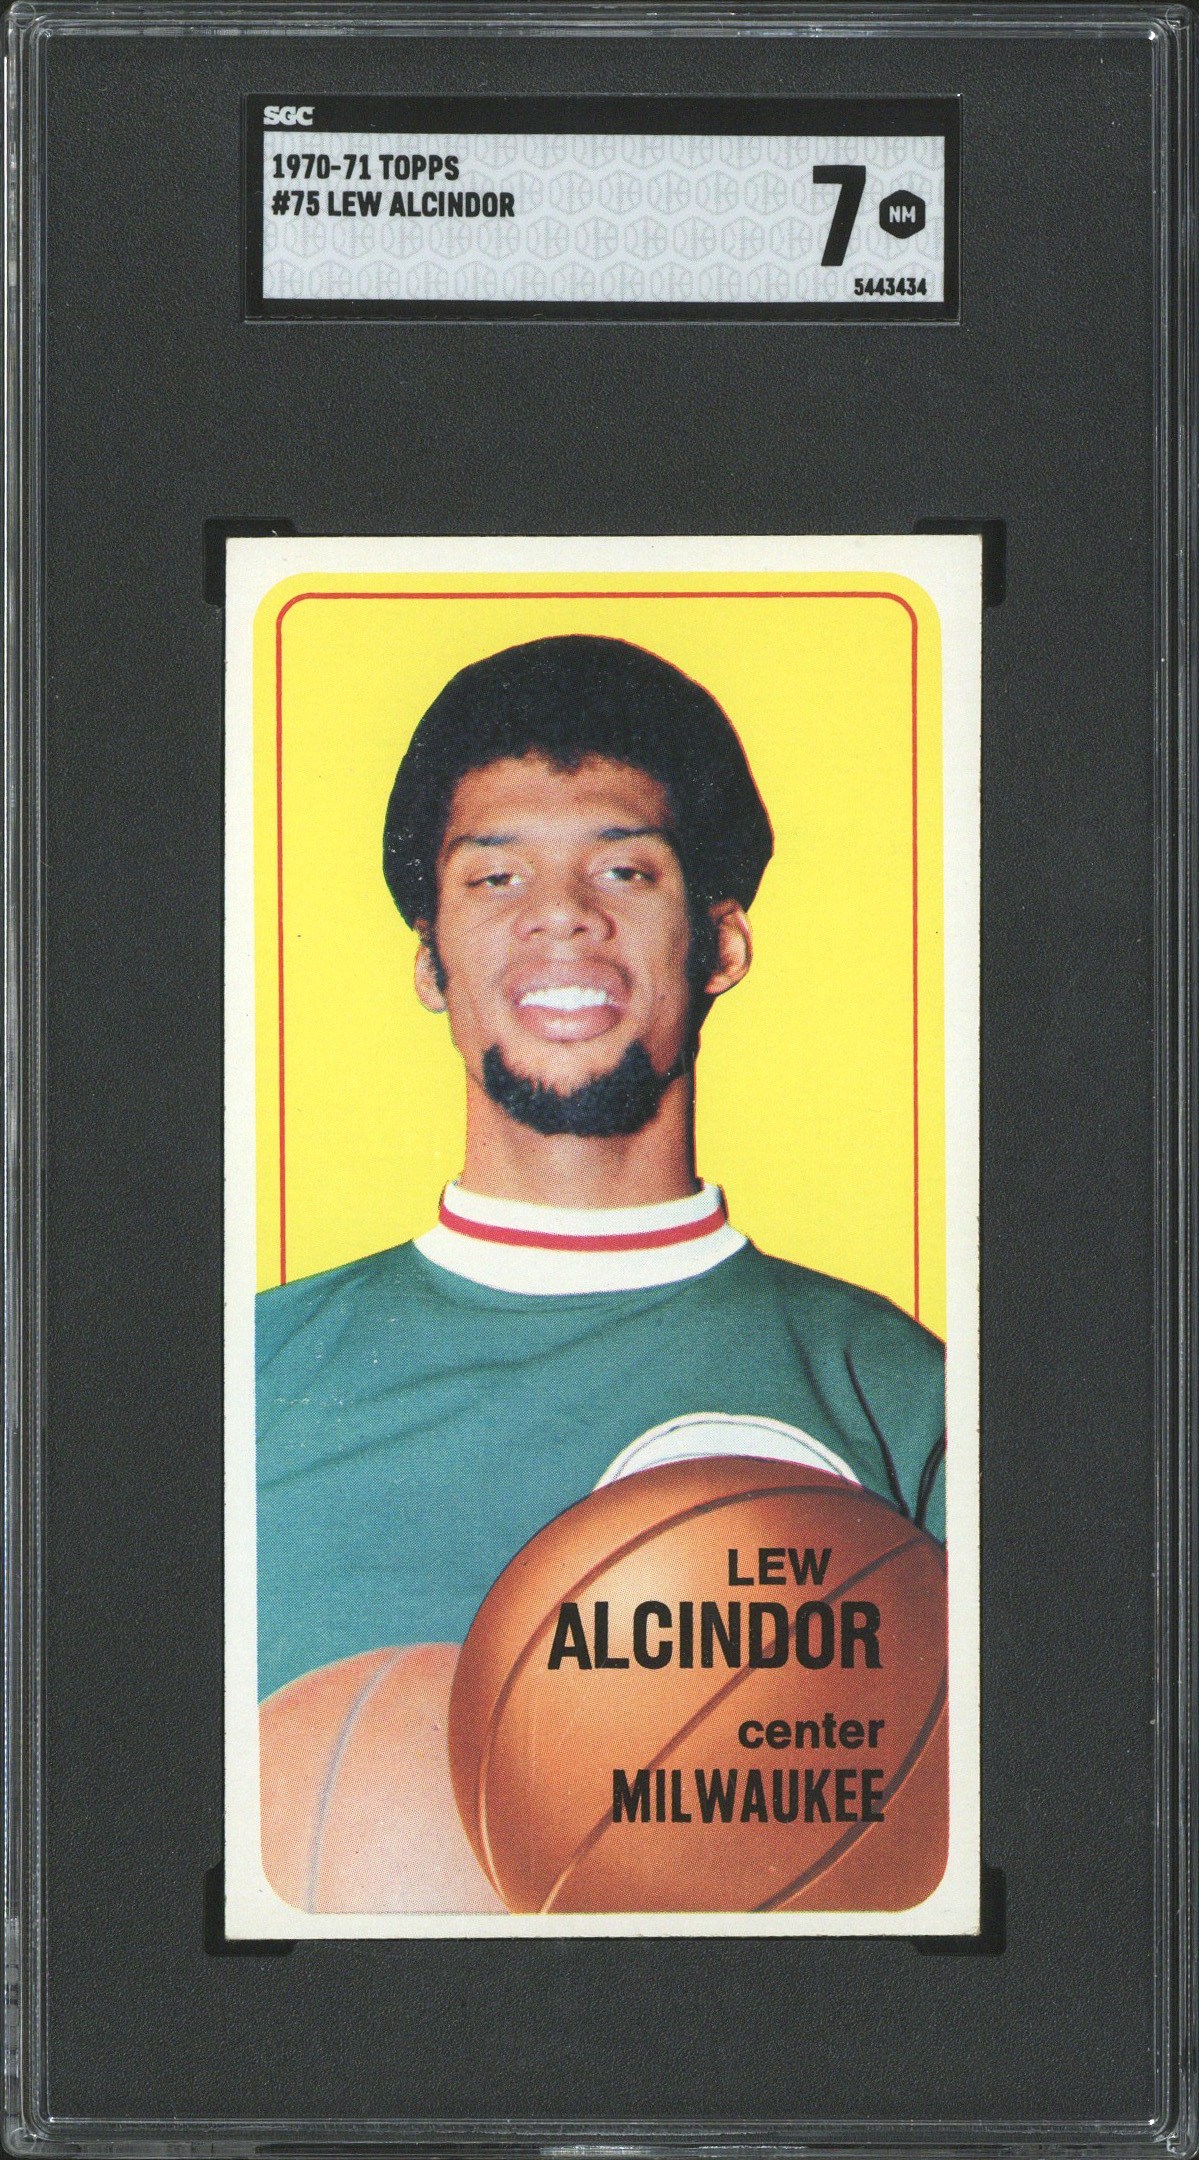 1970-71 Topps Basketball #75 - Lew Alcindor (HOF) - SGC NM 7